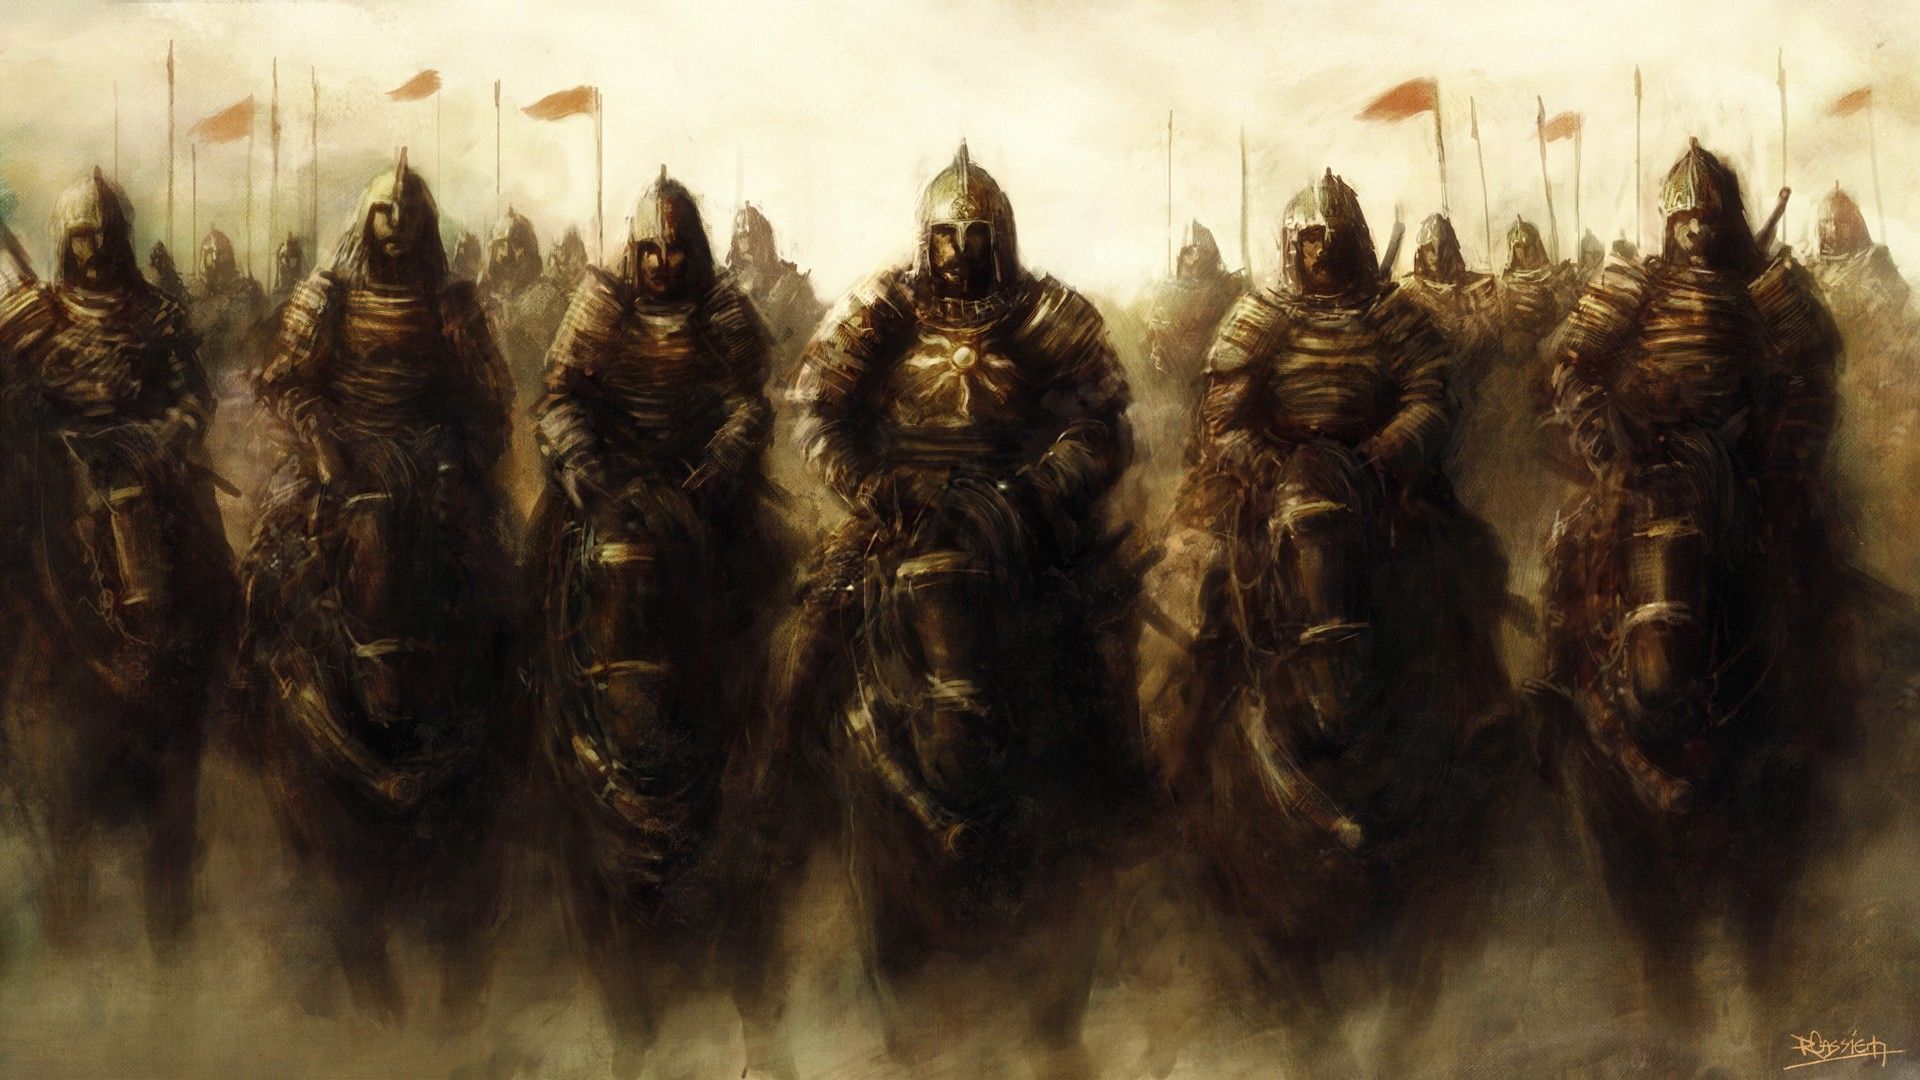 Dark Souls 2. Warriors wallpaper, Knight art, Warrior